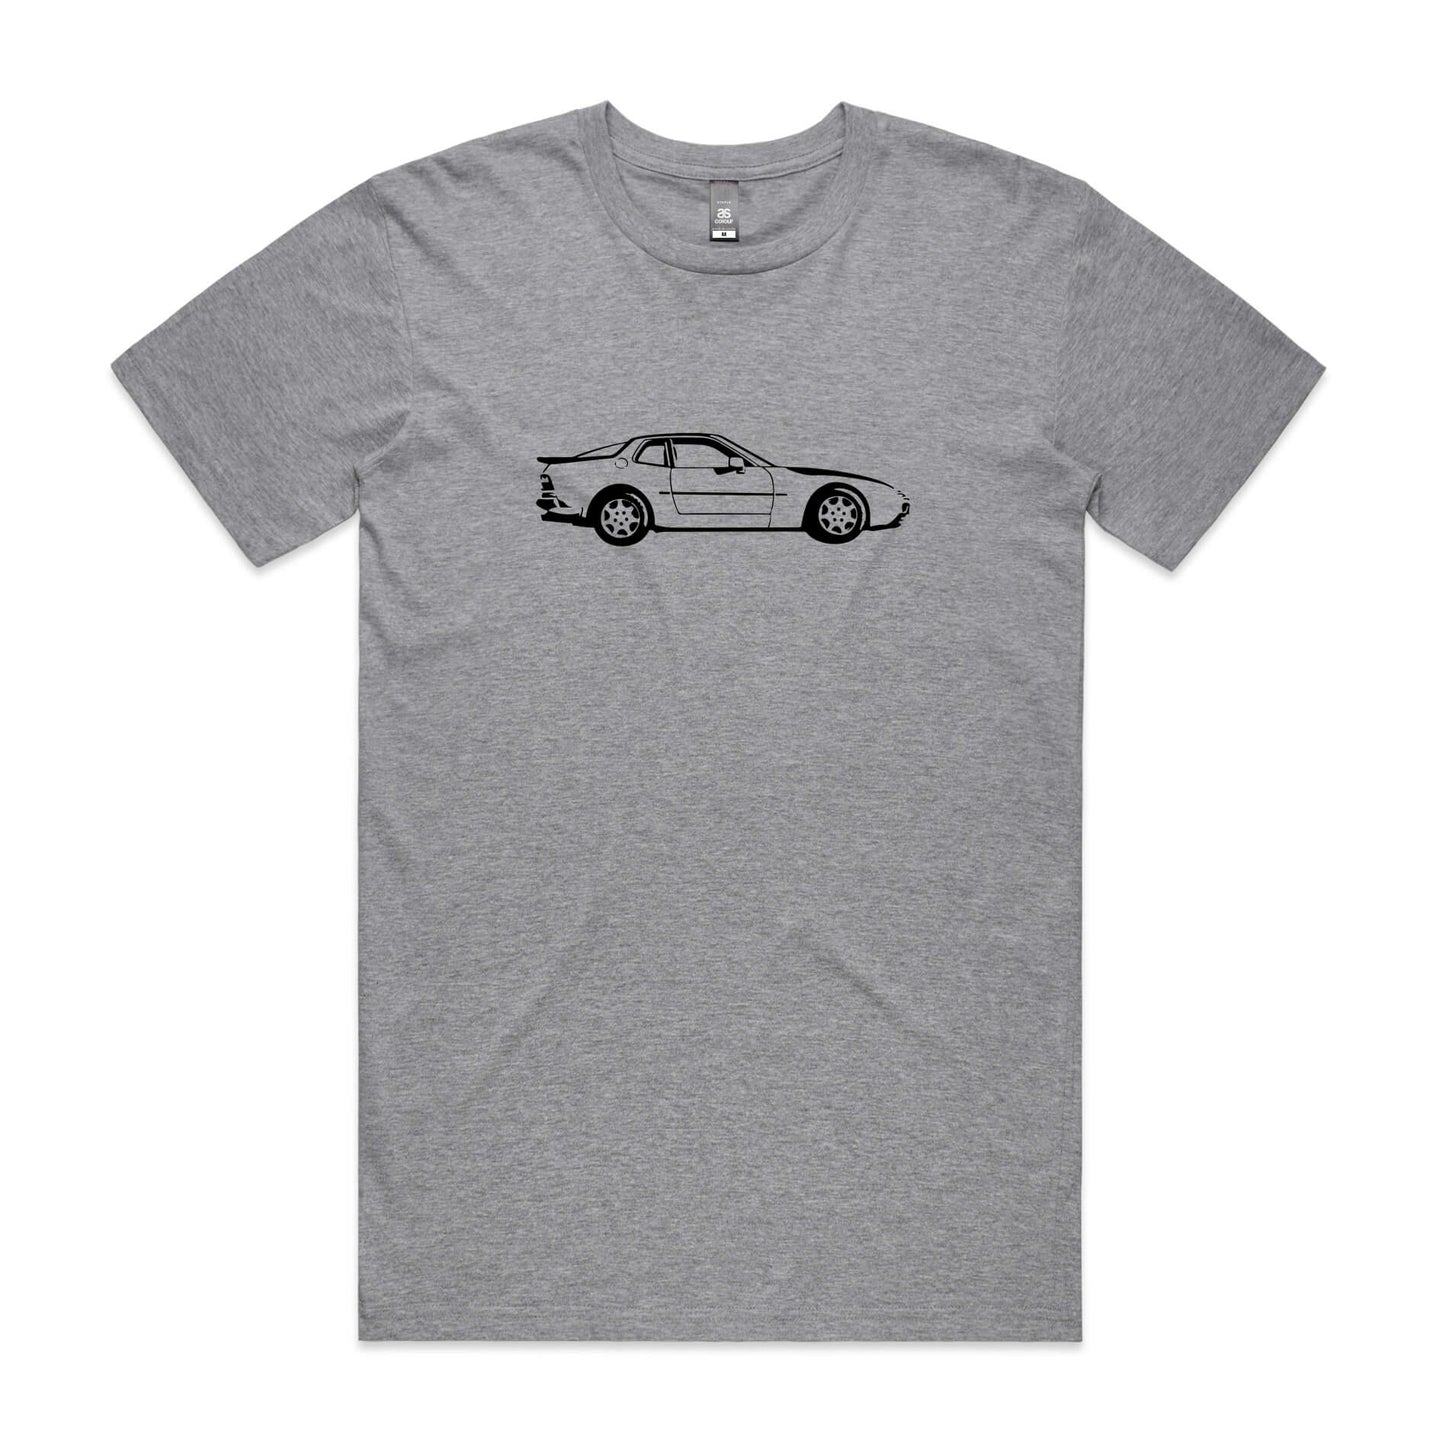 Porsche 944 t-shirt in grey with black car graphic